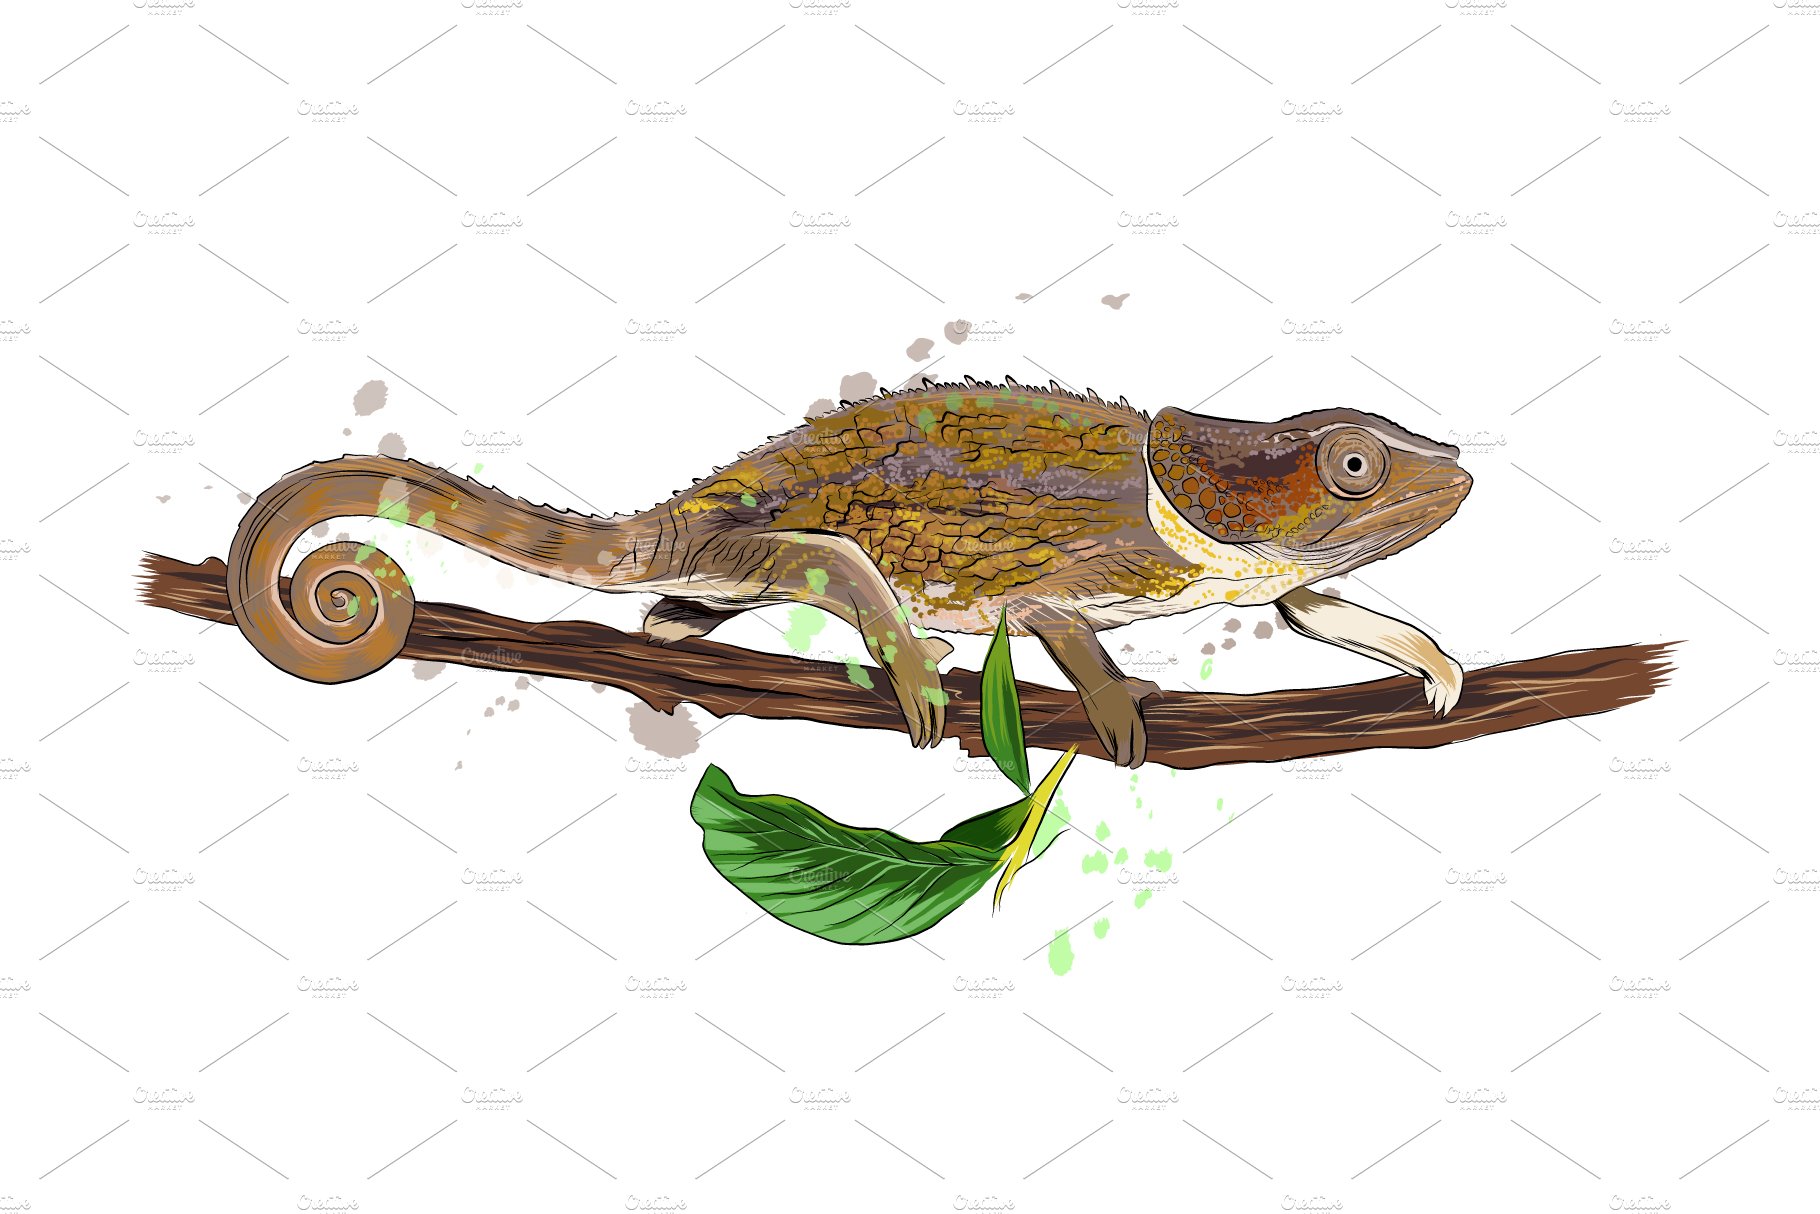 Chameleon from a splash cover image.